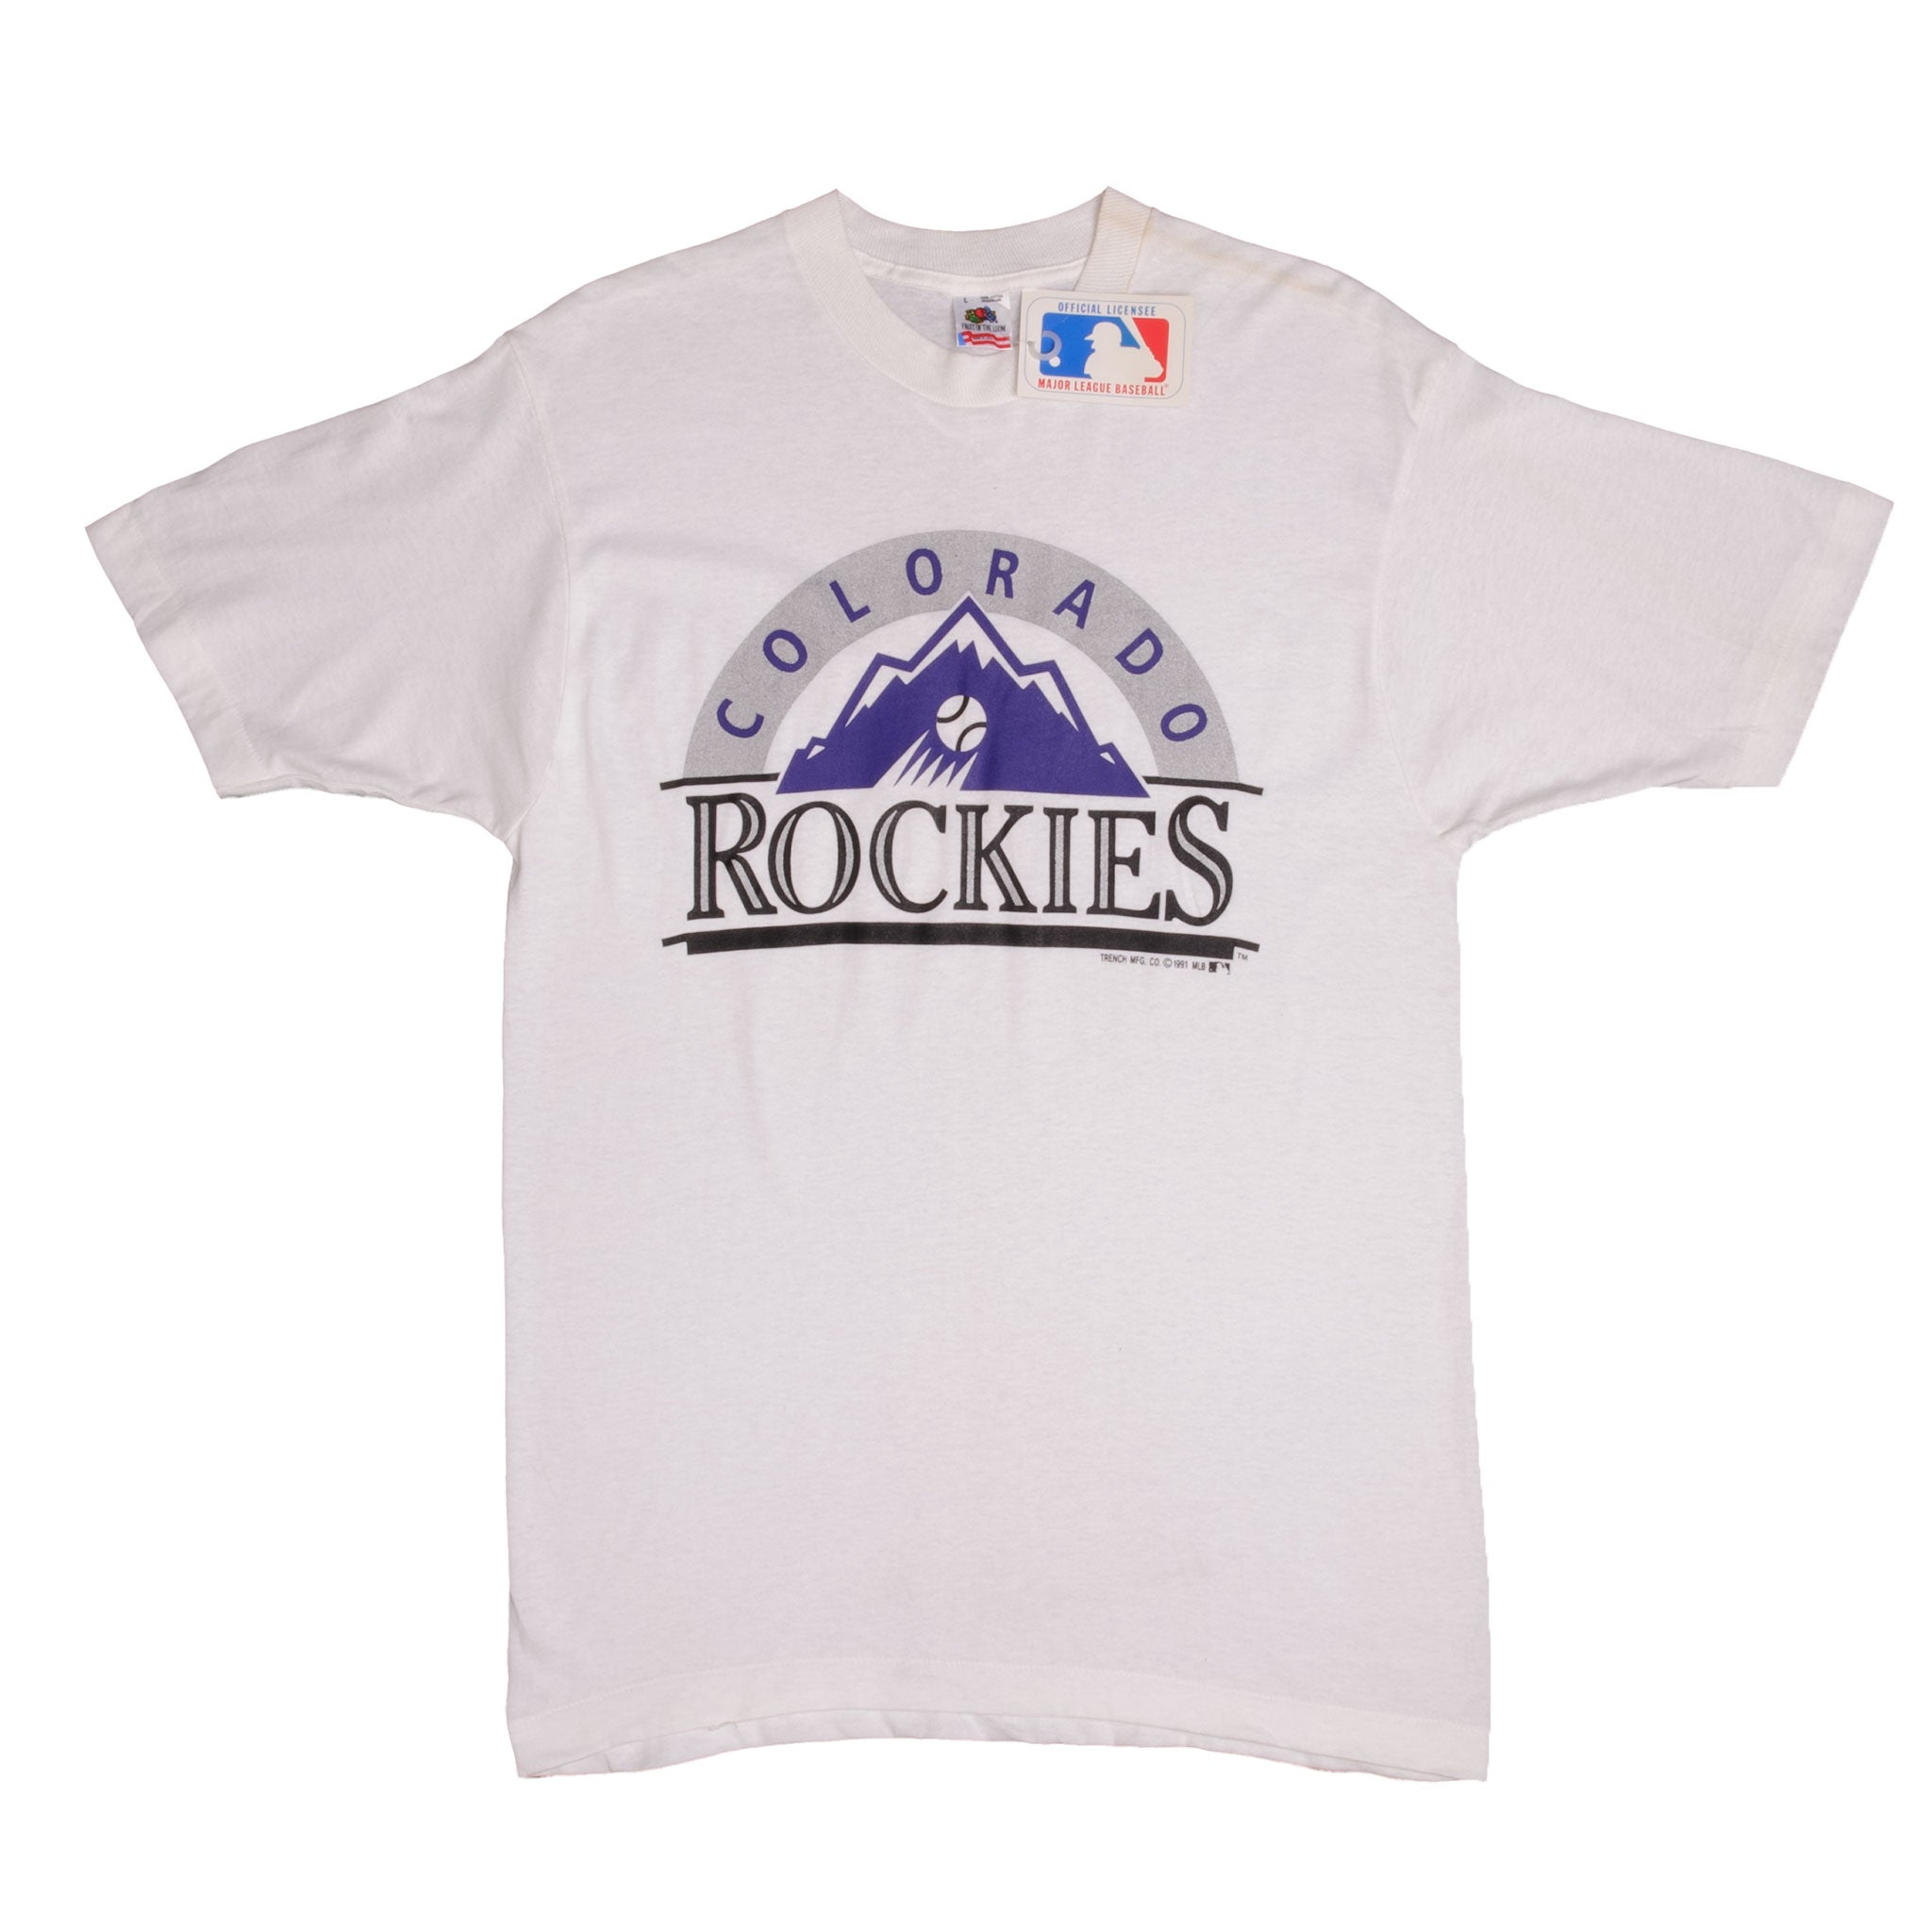 Vintage Colorado Rockies Shirt Large White Purple 90s MLB Baseball Two Tone